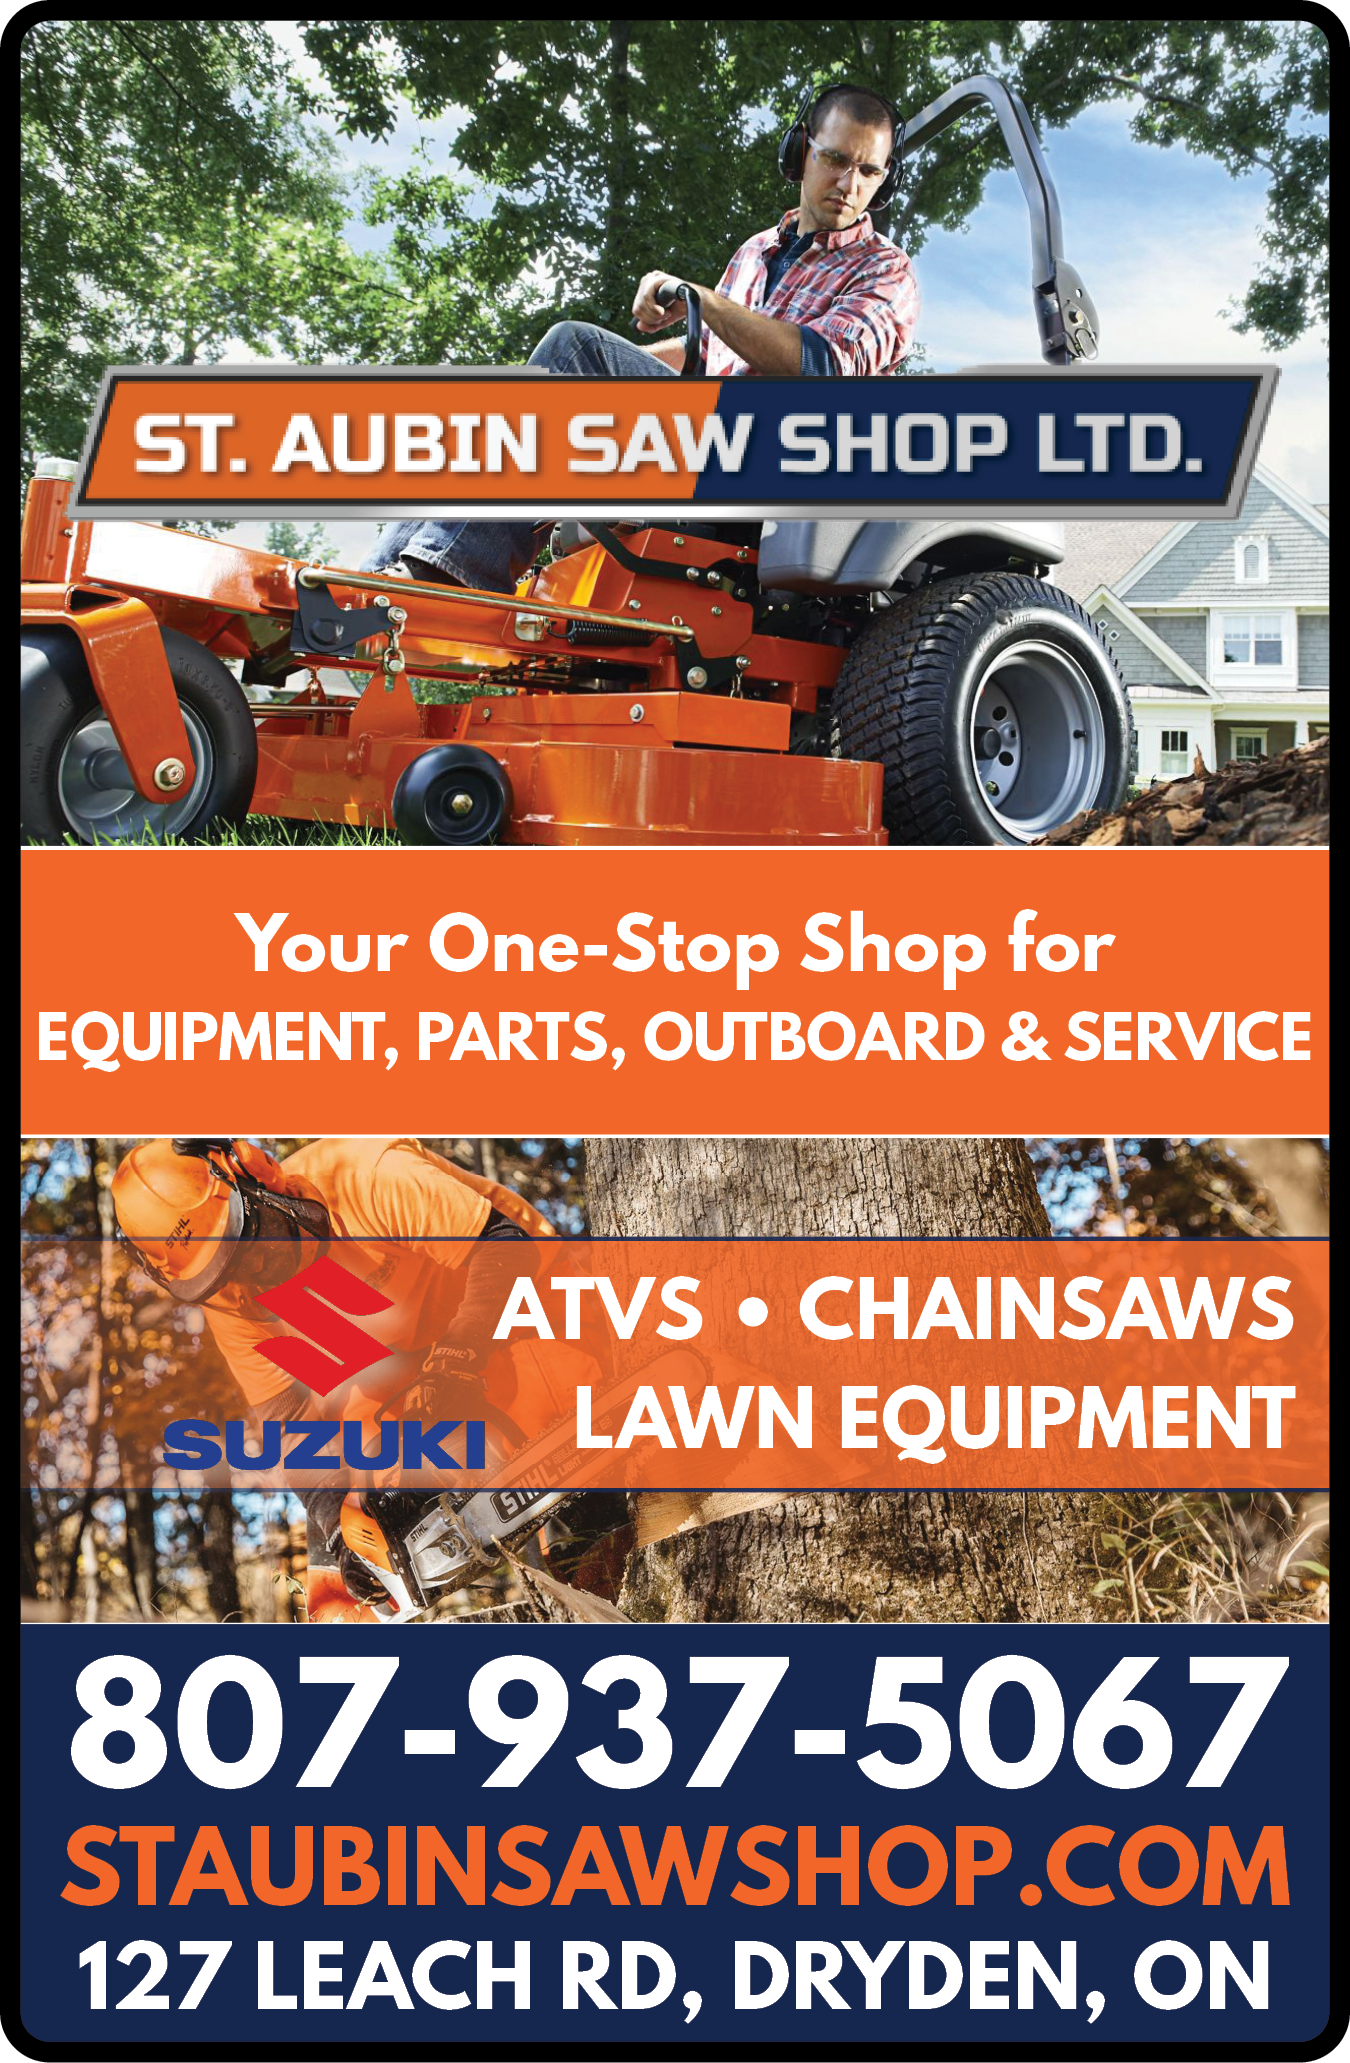 St. Aubin Saw Shop Ltd.